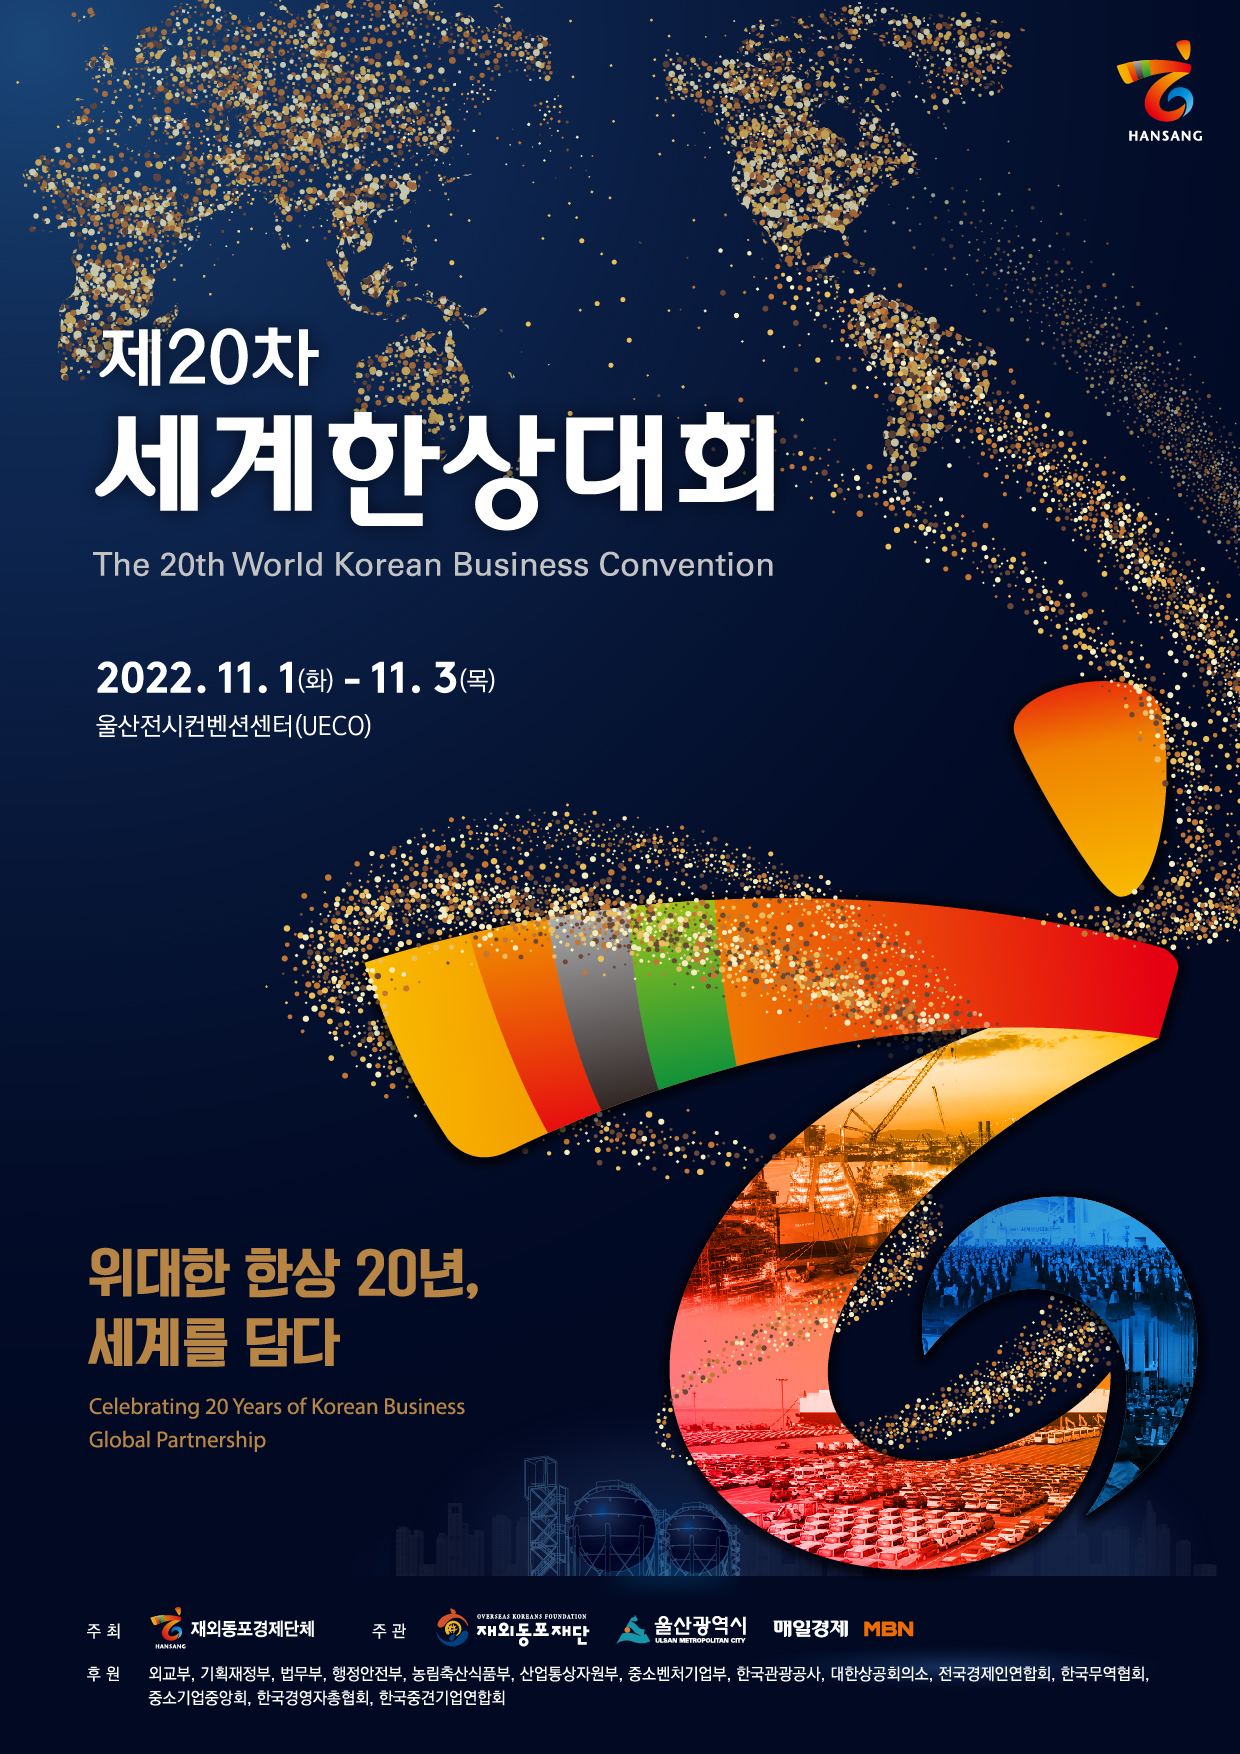 HANSANG 제20차 세계한상대회 The 20th World Korean Business Convention 2022. 11. 1(화) - 11. 3 (목) 울산전시컨벤션센터(UECO) 위대한 한상 20년, 세계를 담다. Celebrating 20 Years of Korean Business Global Partnership OVERSEAS KOREANS FOUNDATION 주최 재외동포경제단체 재외동포재다. 울산광역시 매일경제 MBN ULSAN METROPOLITAN CITY HANSANG 후원 외교부, 기획재정부, 법무부, 행정안전부, 농림축산식품부, 산업통상자원부, 중소벤처기업부, 한국관광공사, 대한상공회의소, 전국경제인연합회, 한국무역협회! 중소기업중앙회, 한국경영자총협회, 한국중견기업연합회